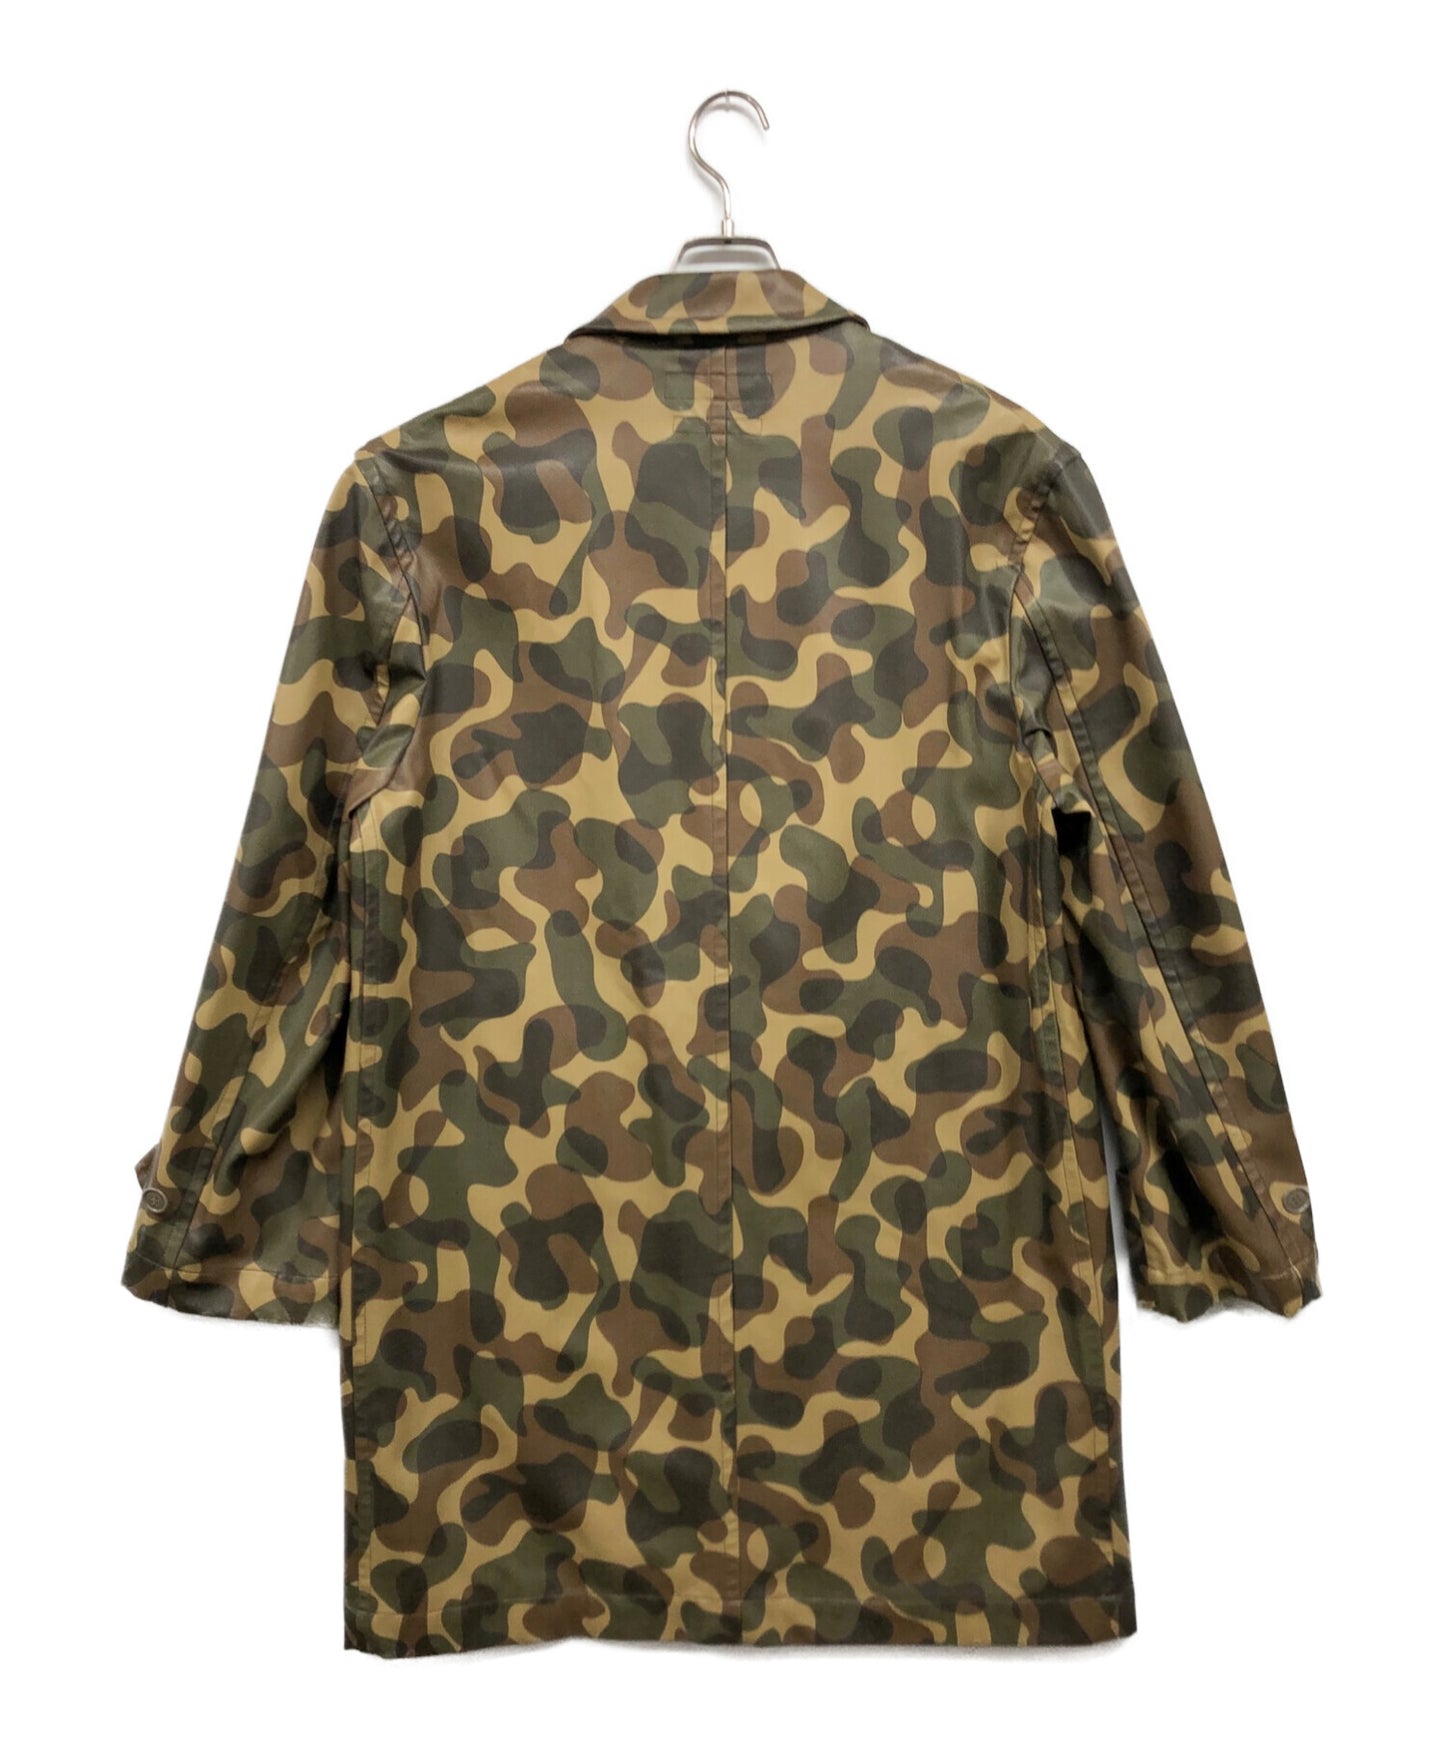 Comme des Garcons 셔츠 가짜 가죽 카모 패턴 스테인레스 스틸 칼라 코트 S10103